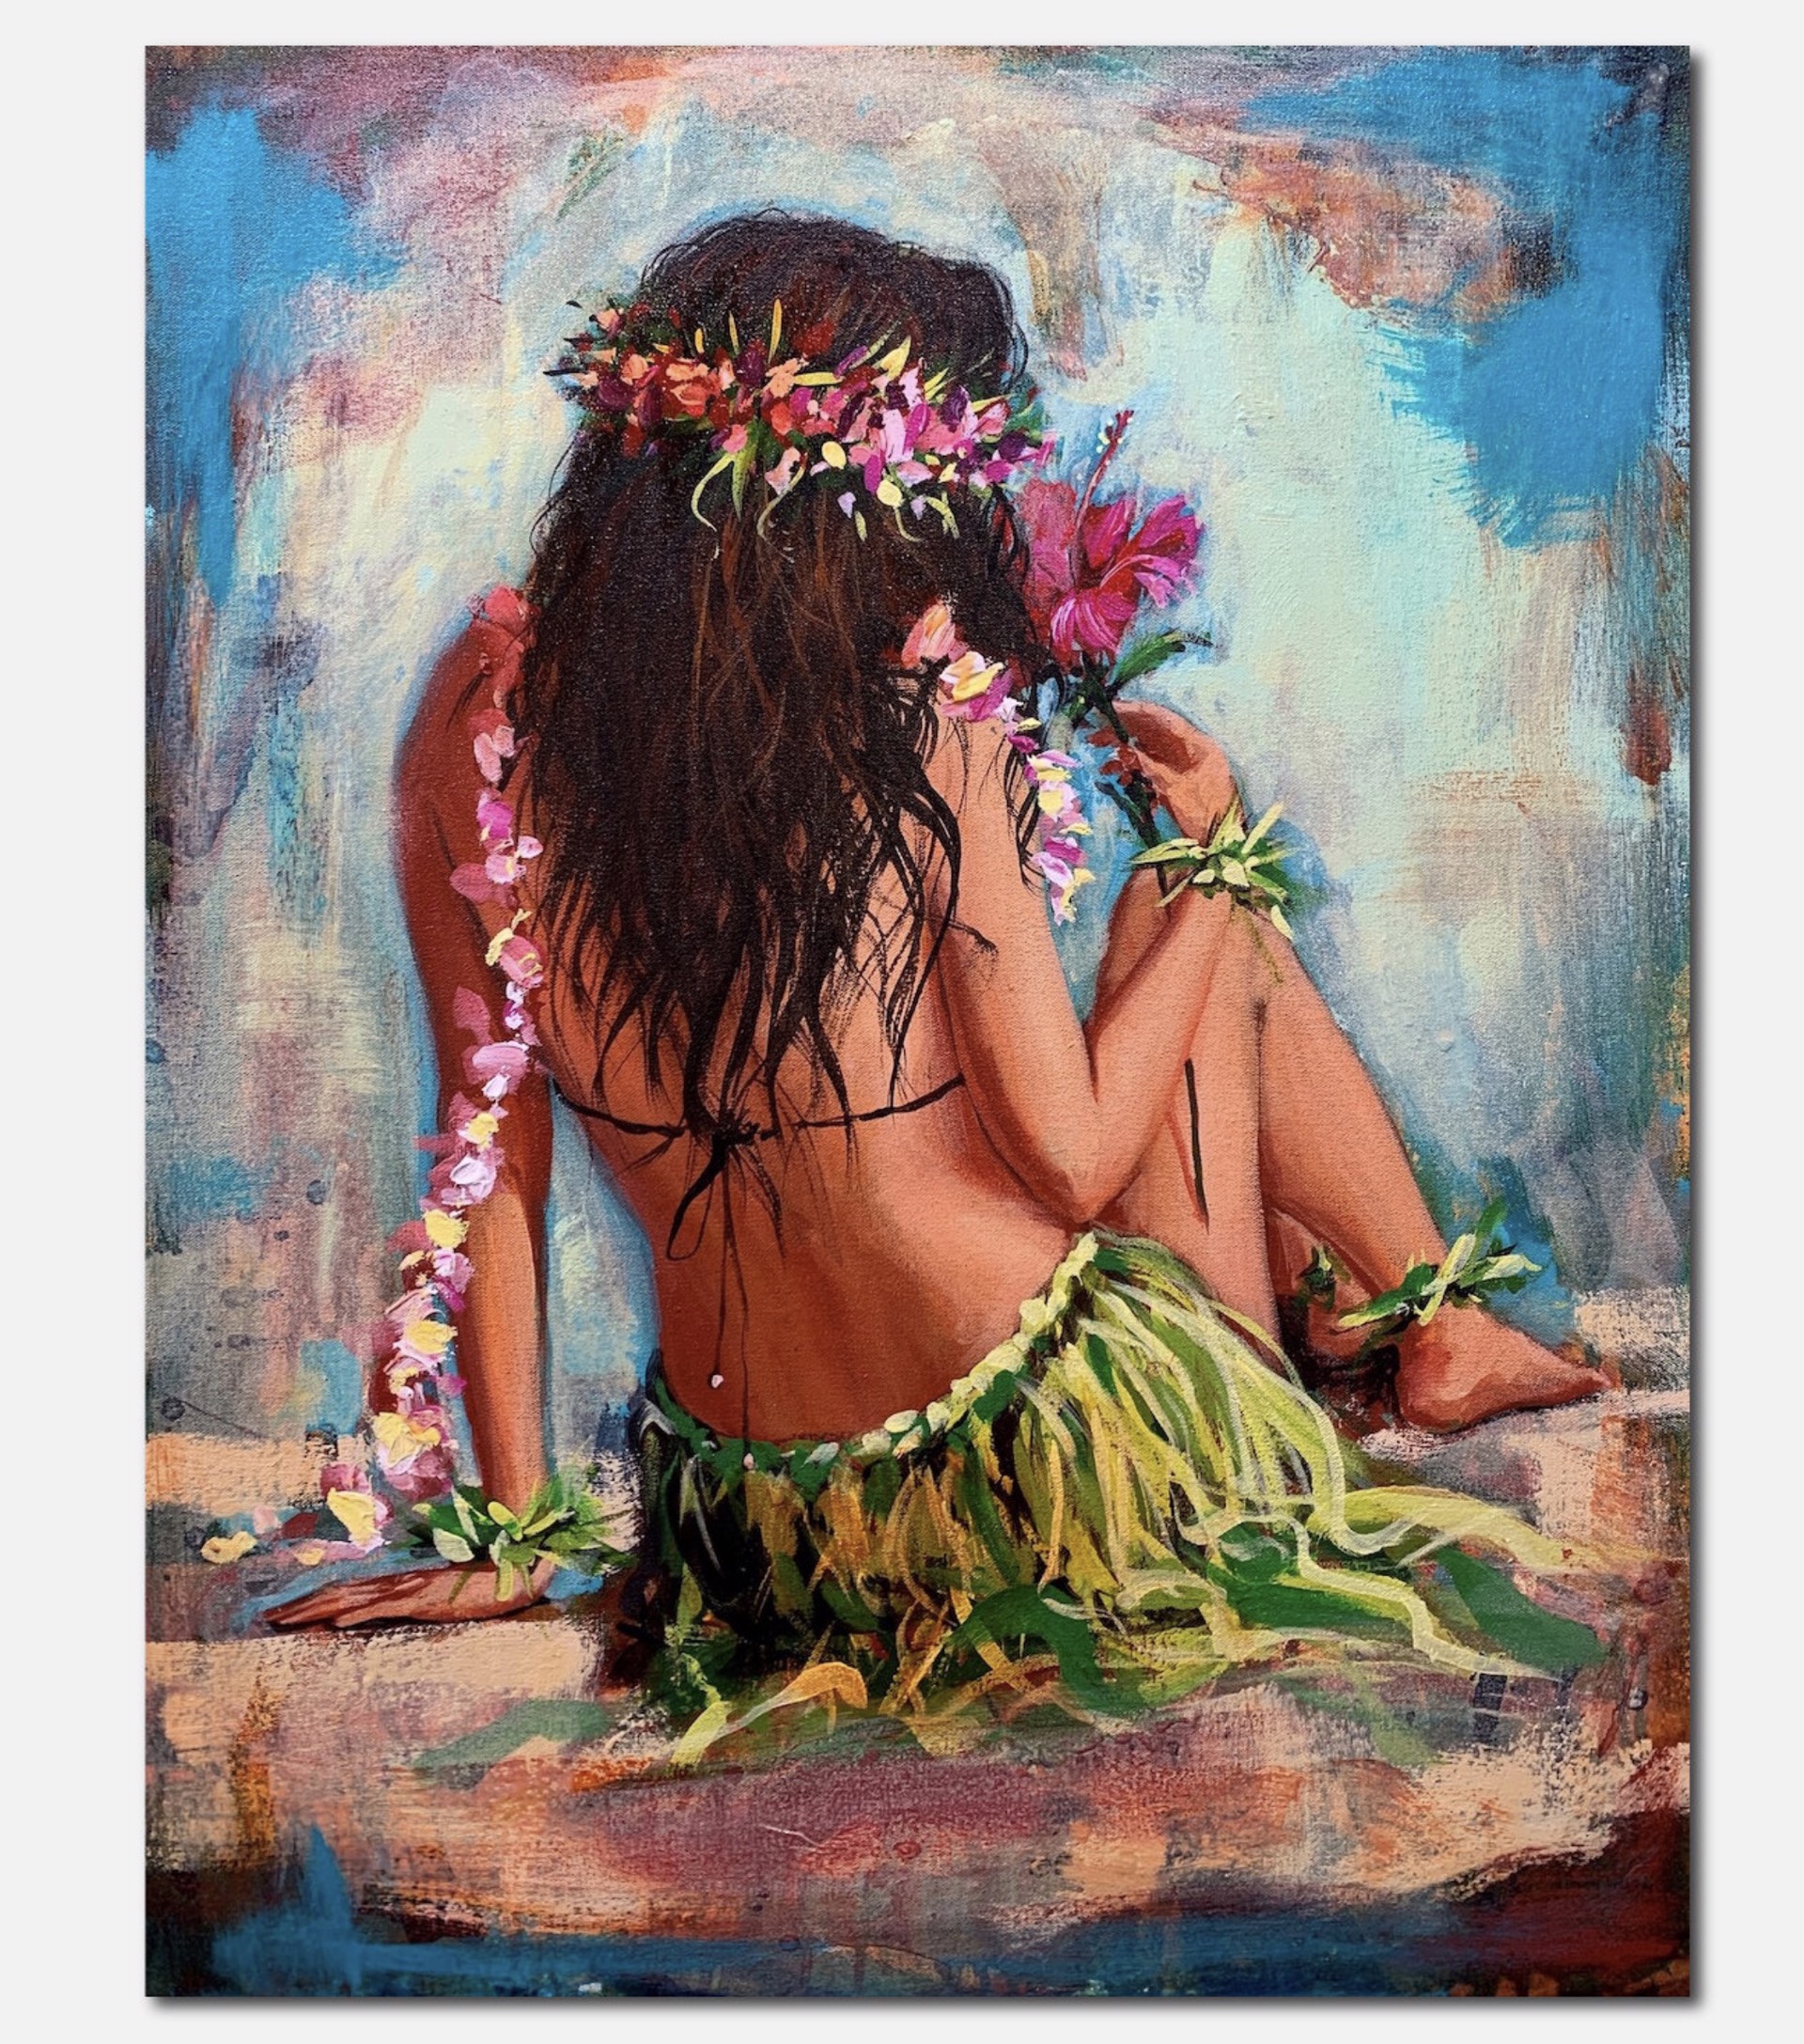 Scent of Aloha by Shawn Mackey